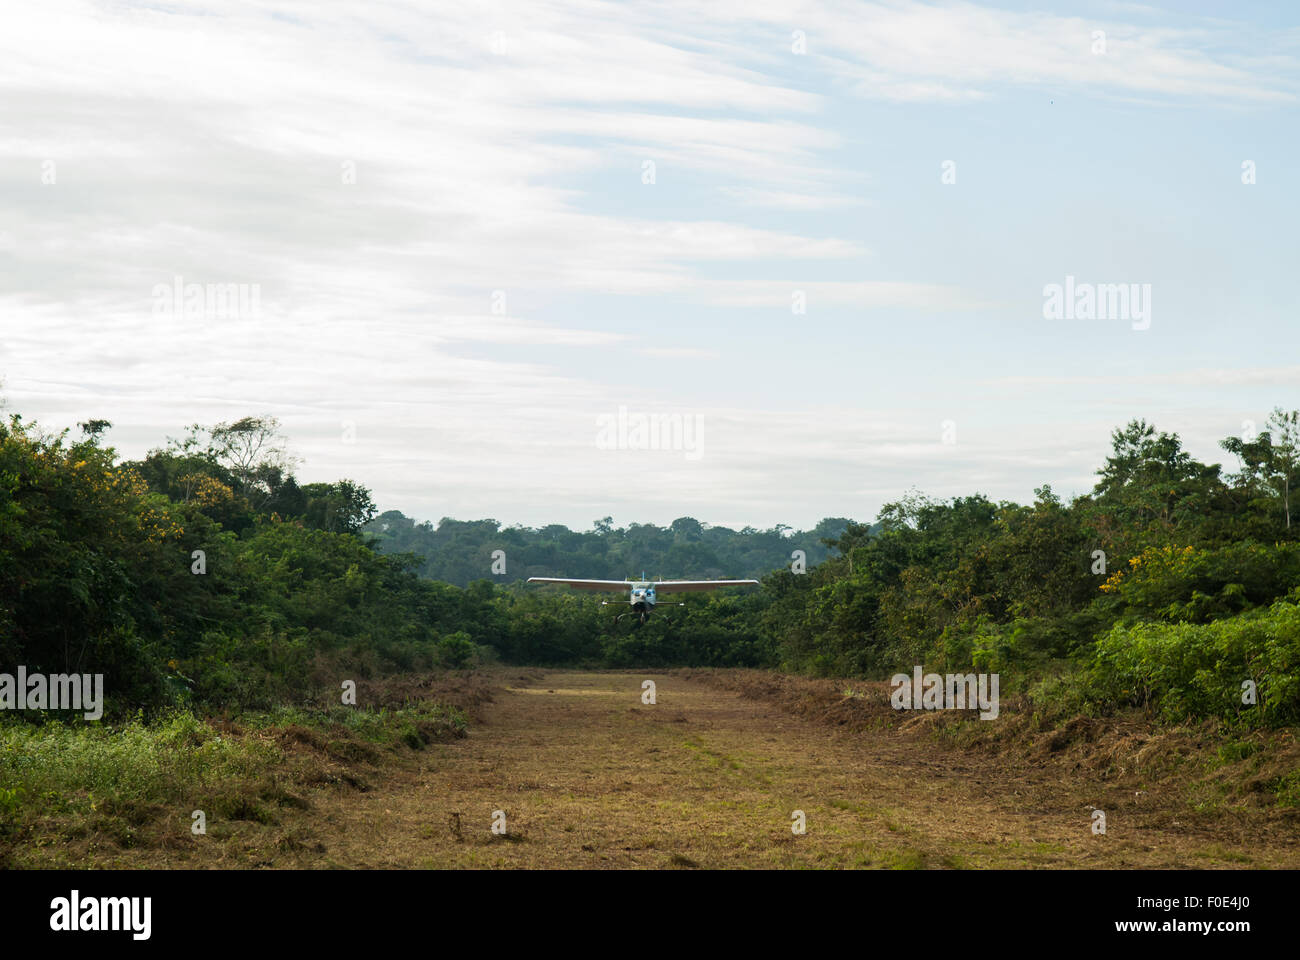 Aldeia Baú, Para, Brasilien. Amazon-Landebahn. Stockfoto